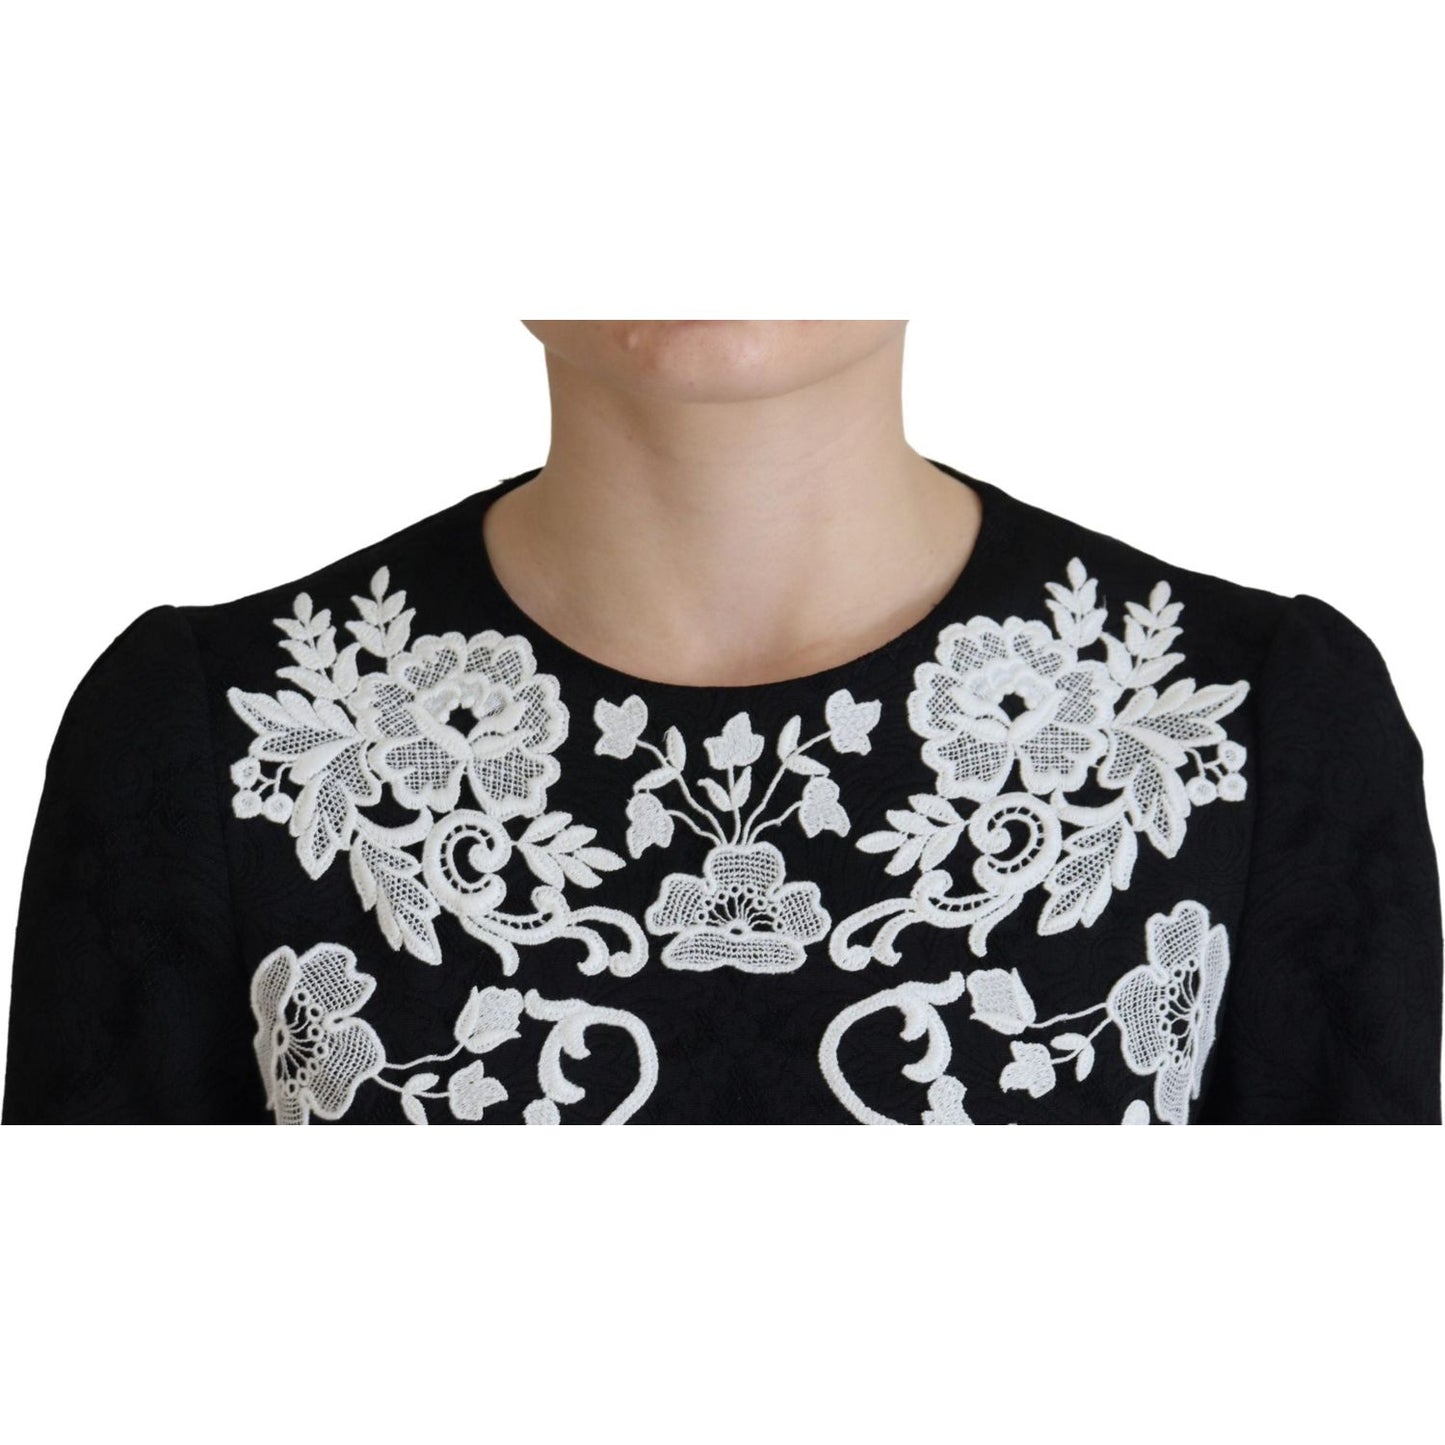 Dolce & GabbanaElegant Black A-Line Mini Dress with Lace TrimMcRichard Designer Brands£1209.00